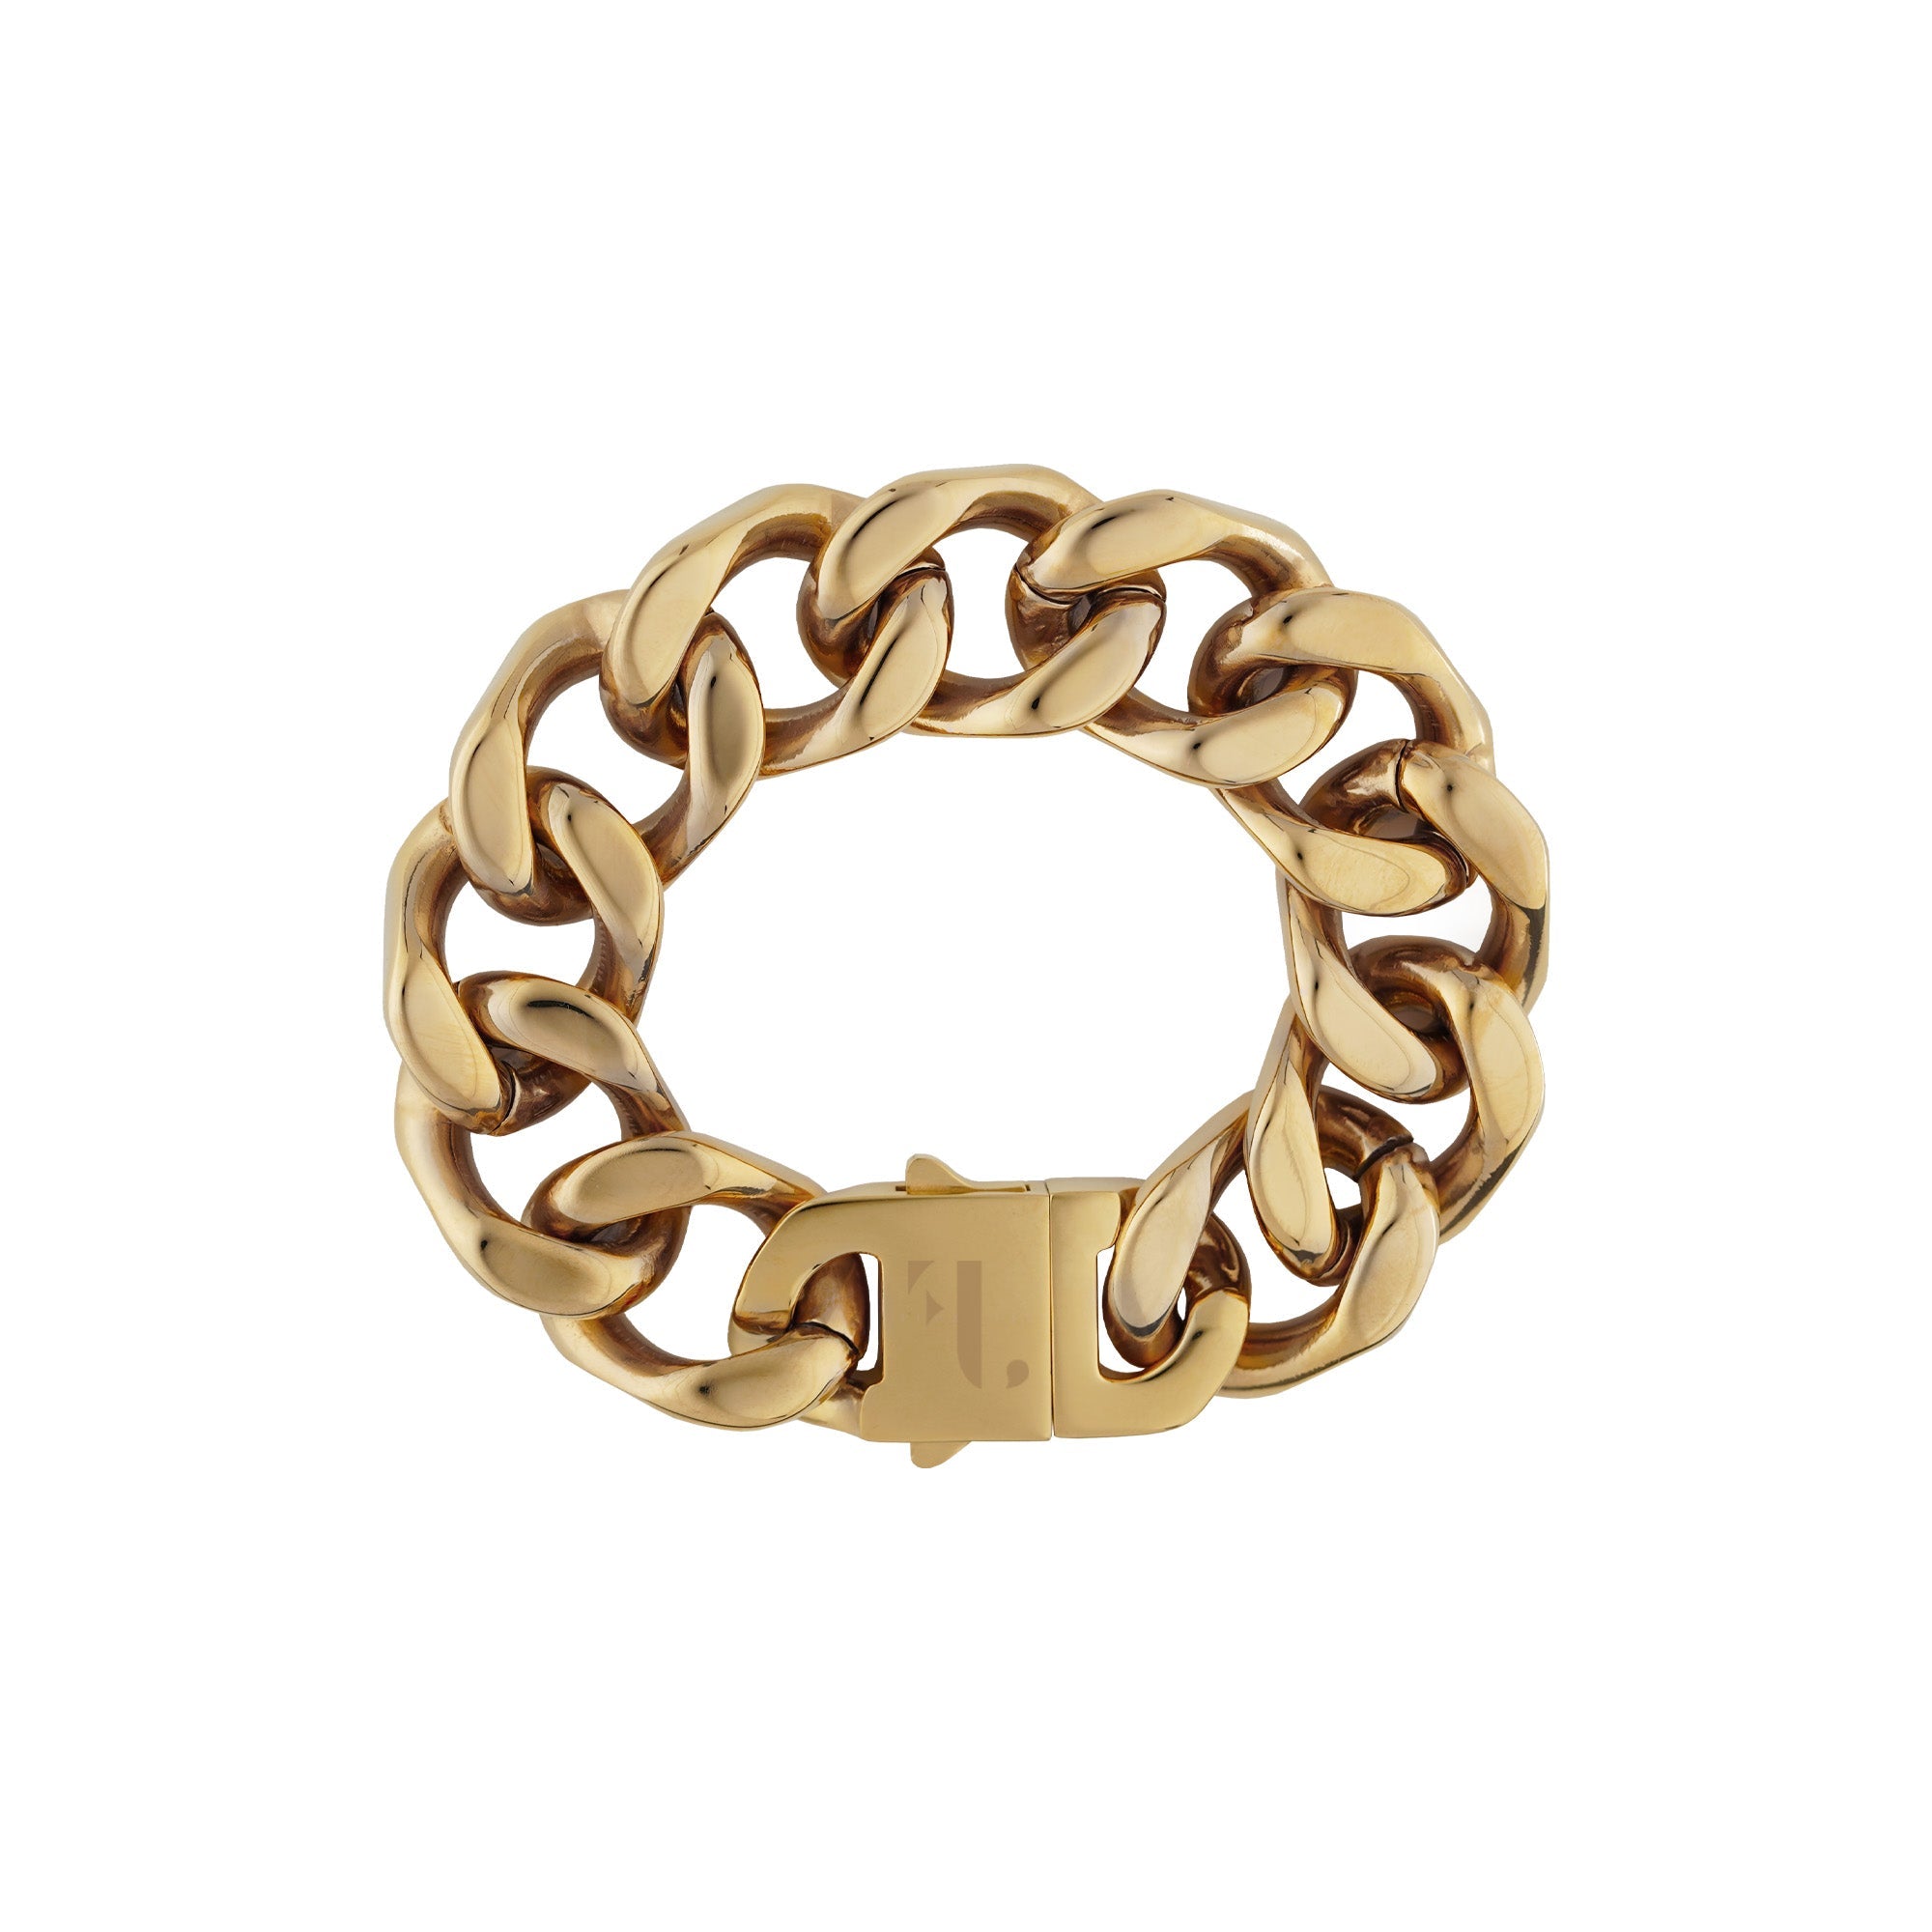 FJ Watches absurd bracelet cuban link chain 18k gold plated men 20mm 20cm stainless steel